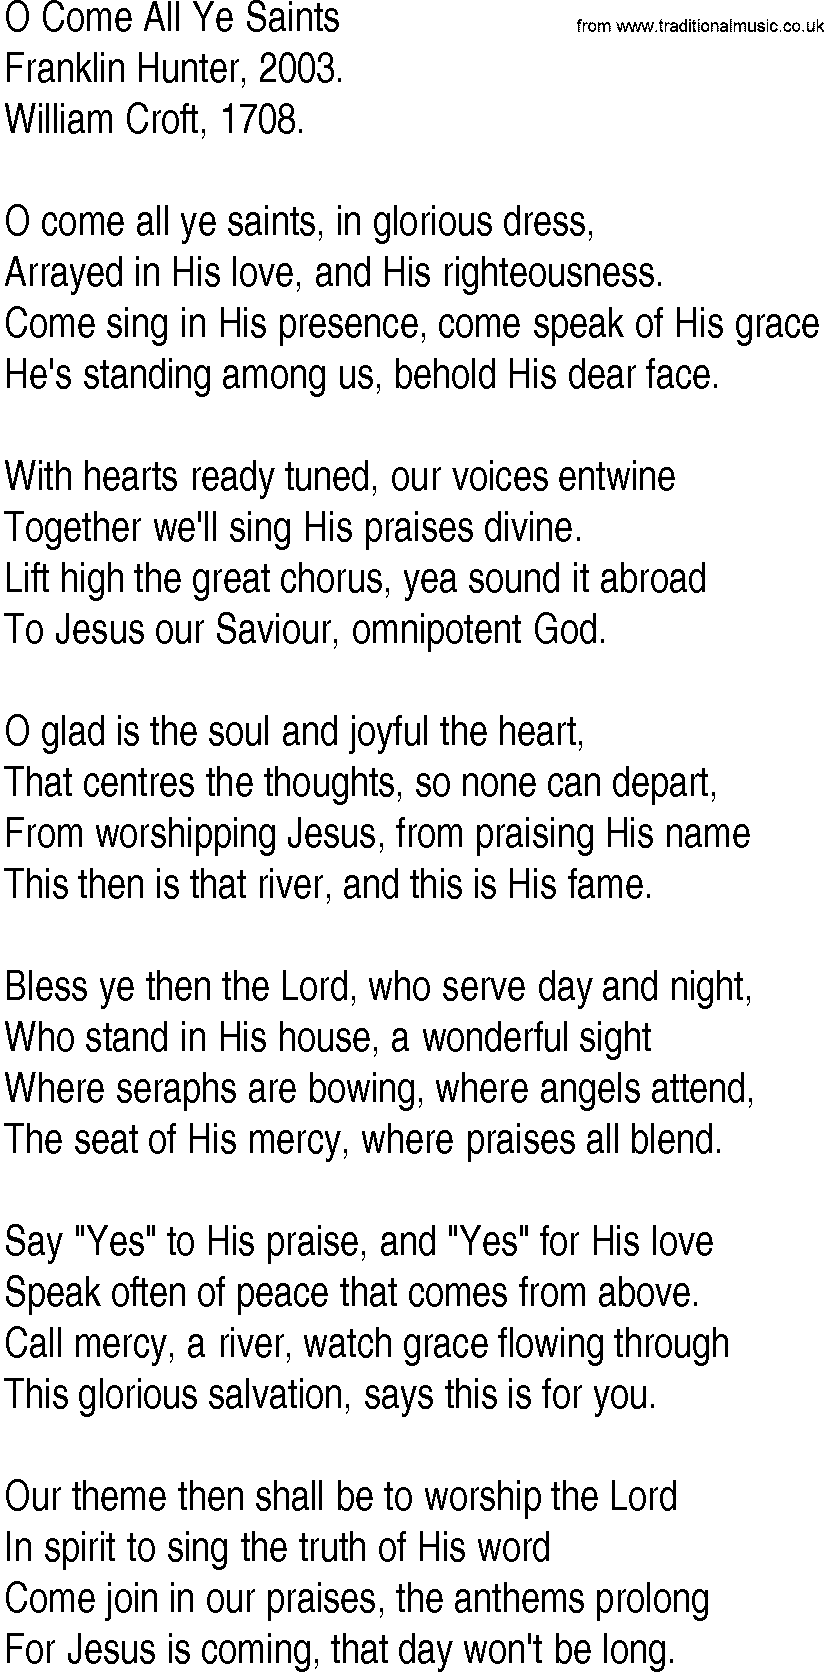 Hymn and Gospel Song: O Come All Ye Saints by Franklin Hunter lyrics